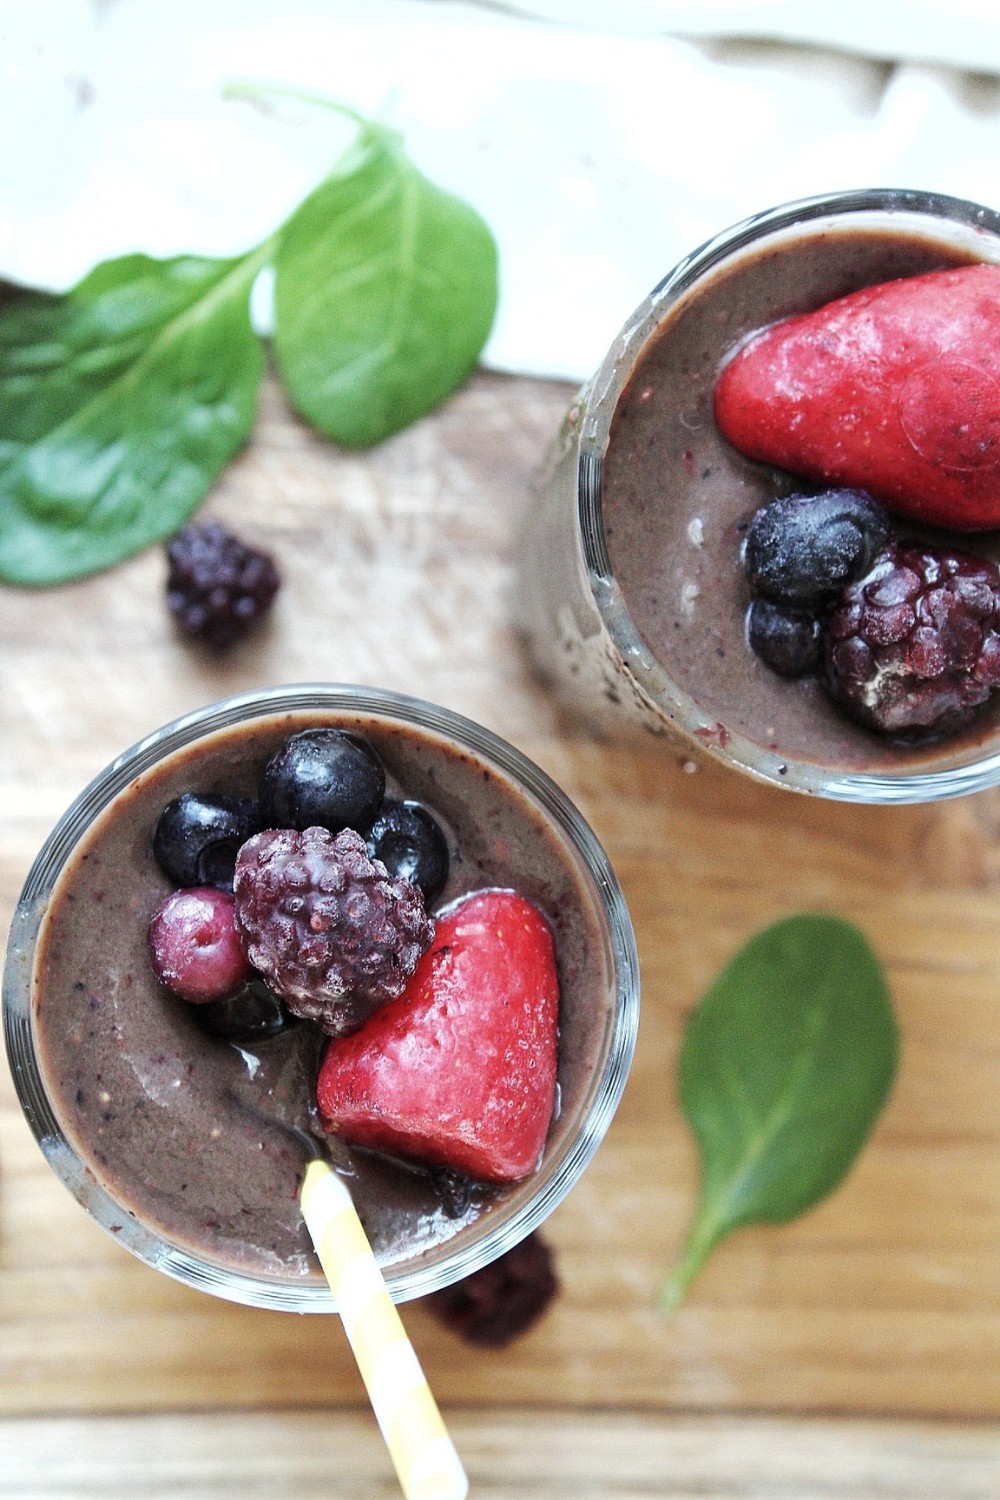 Top look of smoothie with strawberries, blackberries, and blueberries.